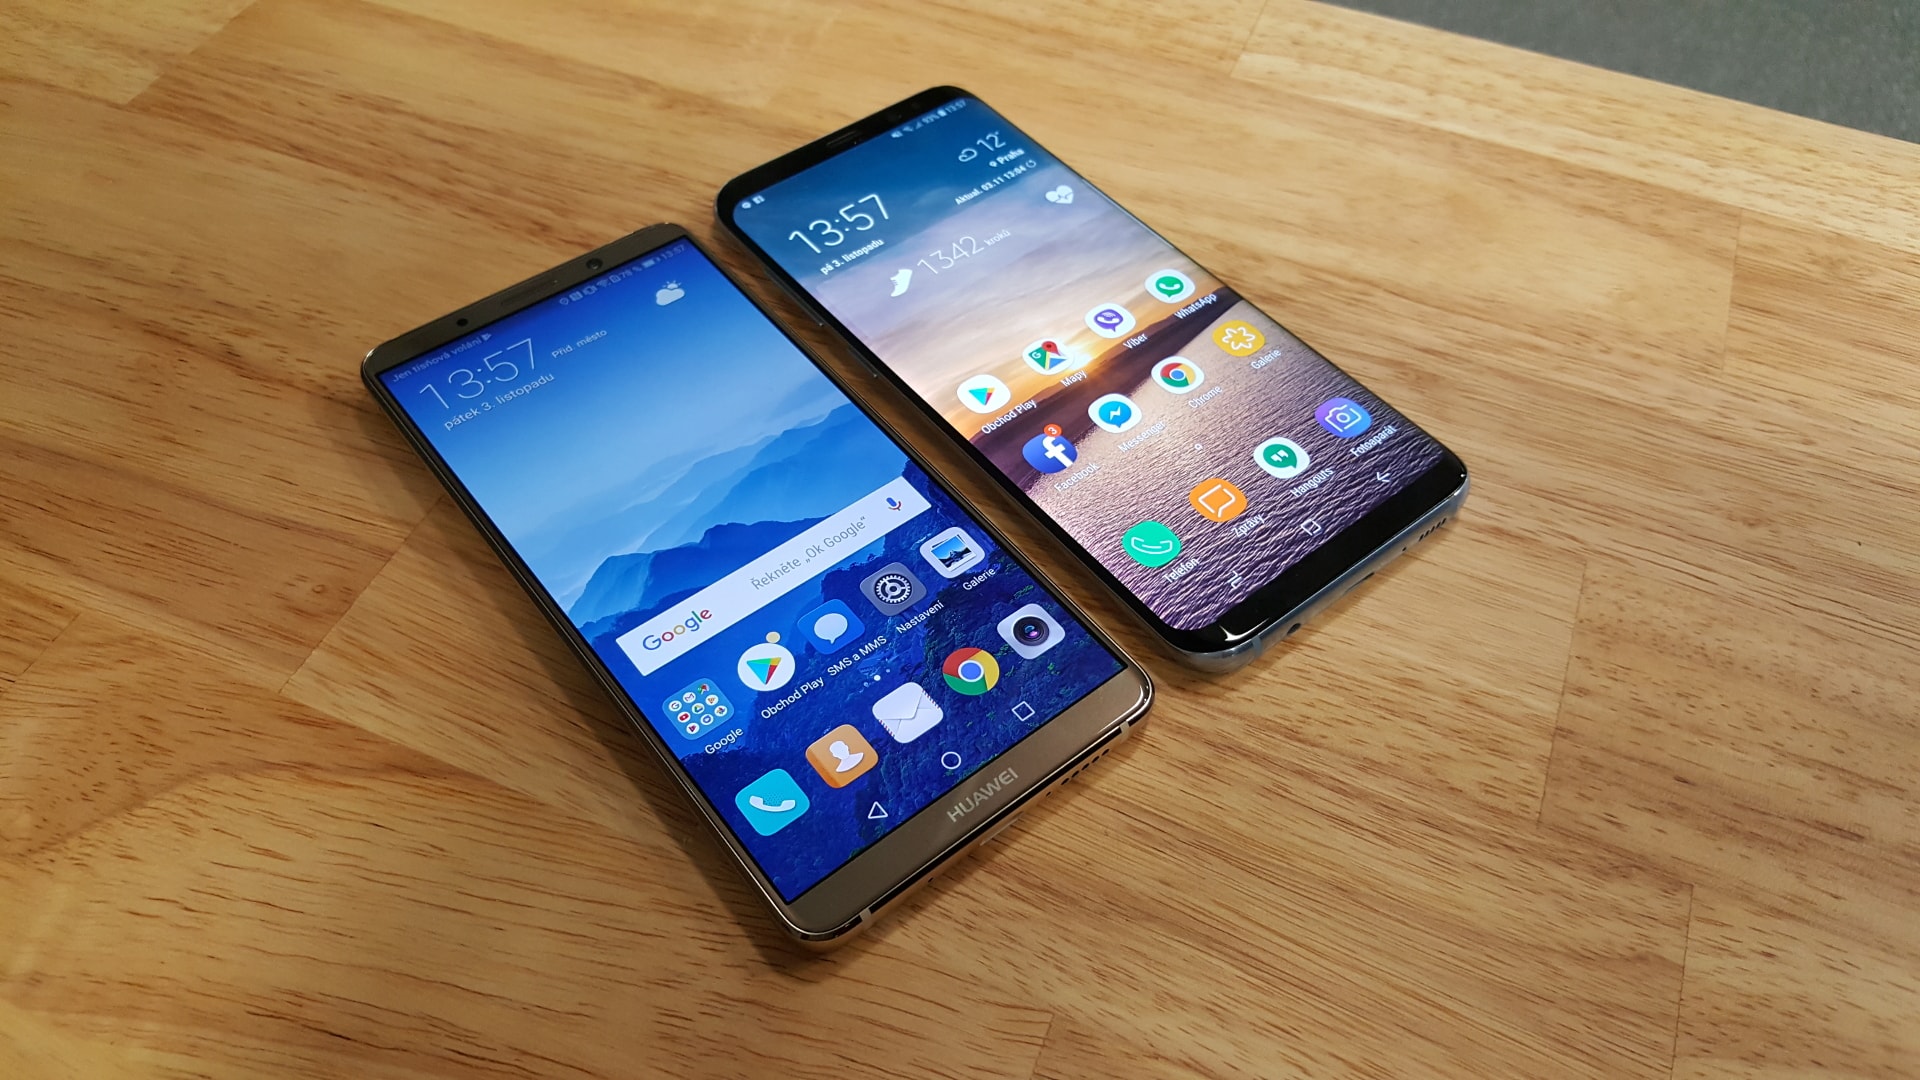 Huawei mate 10 pro vs samsung s8 plus